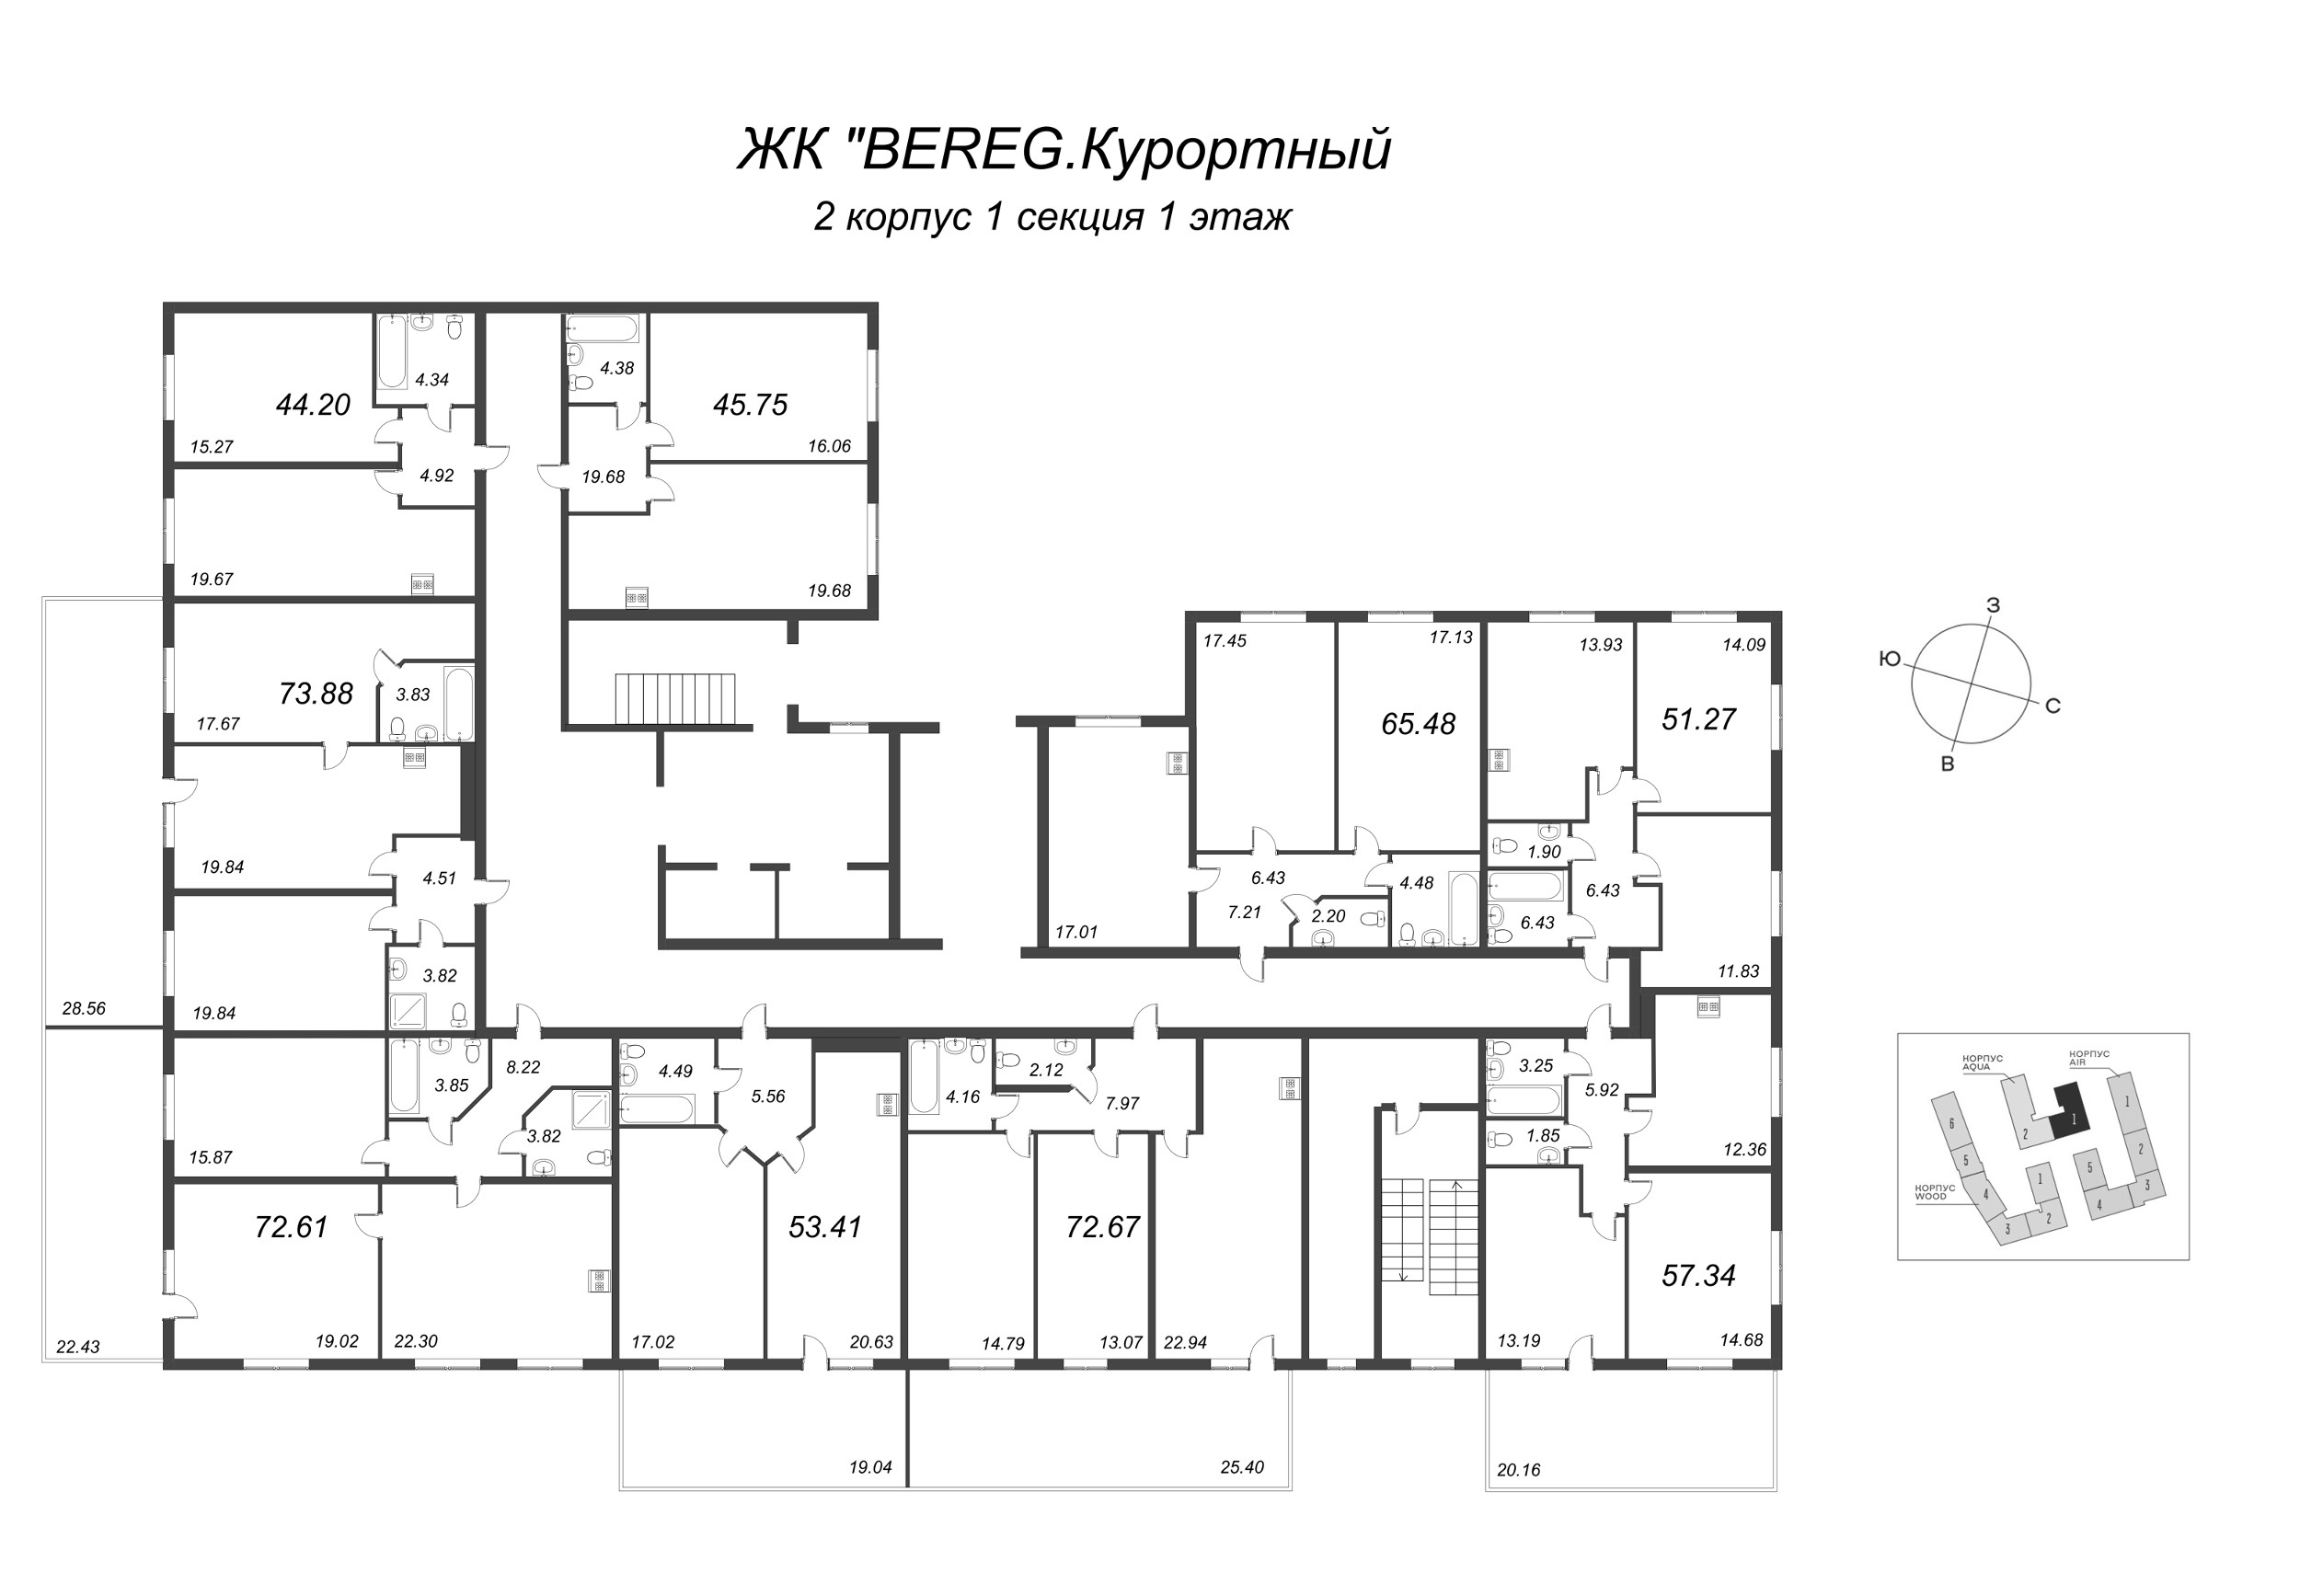 3-комнатная (Евро) квартира, 65.48 м² - планировка этажа